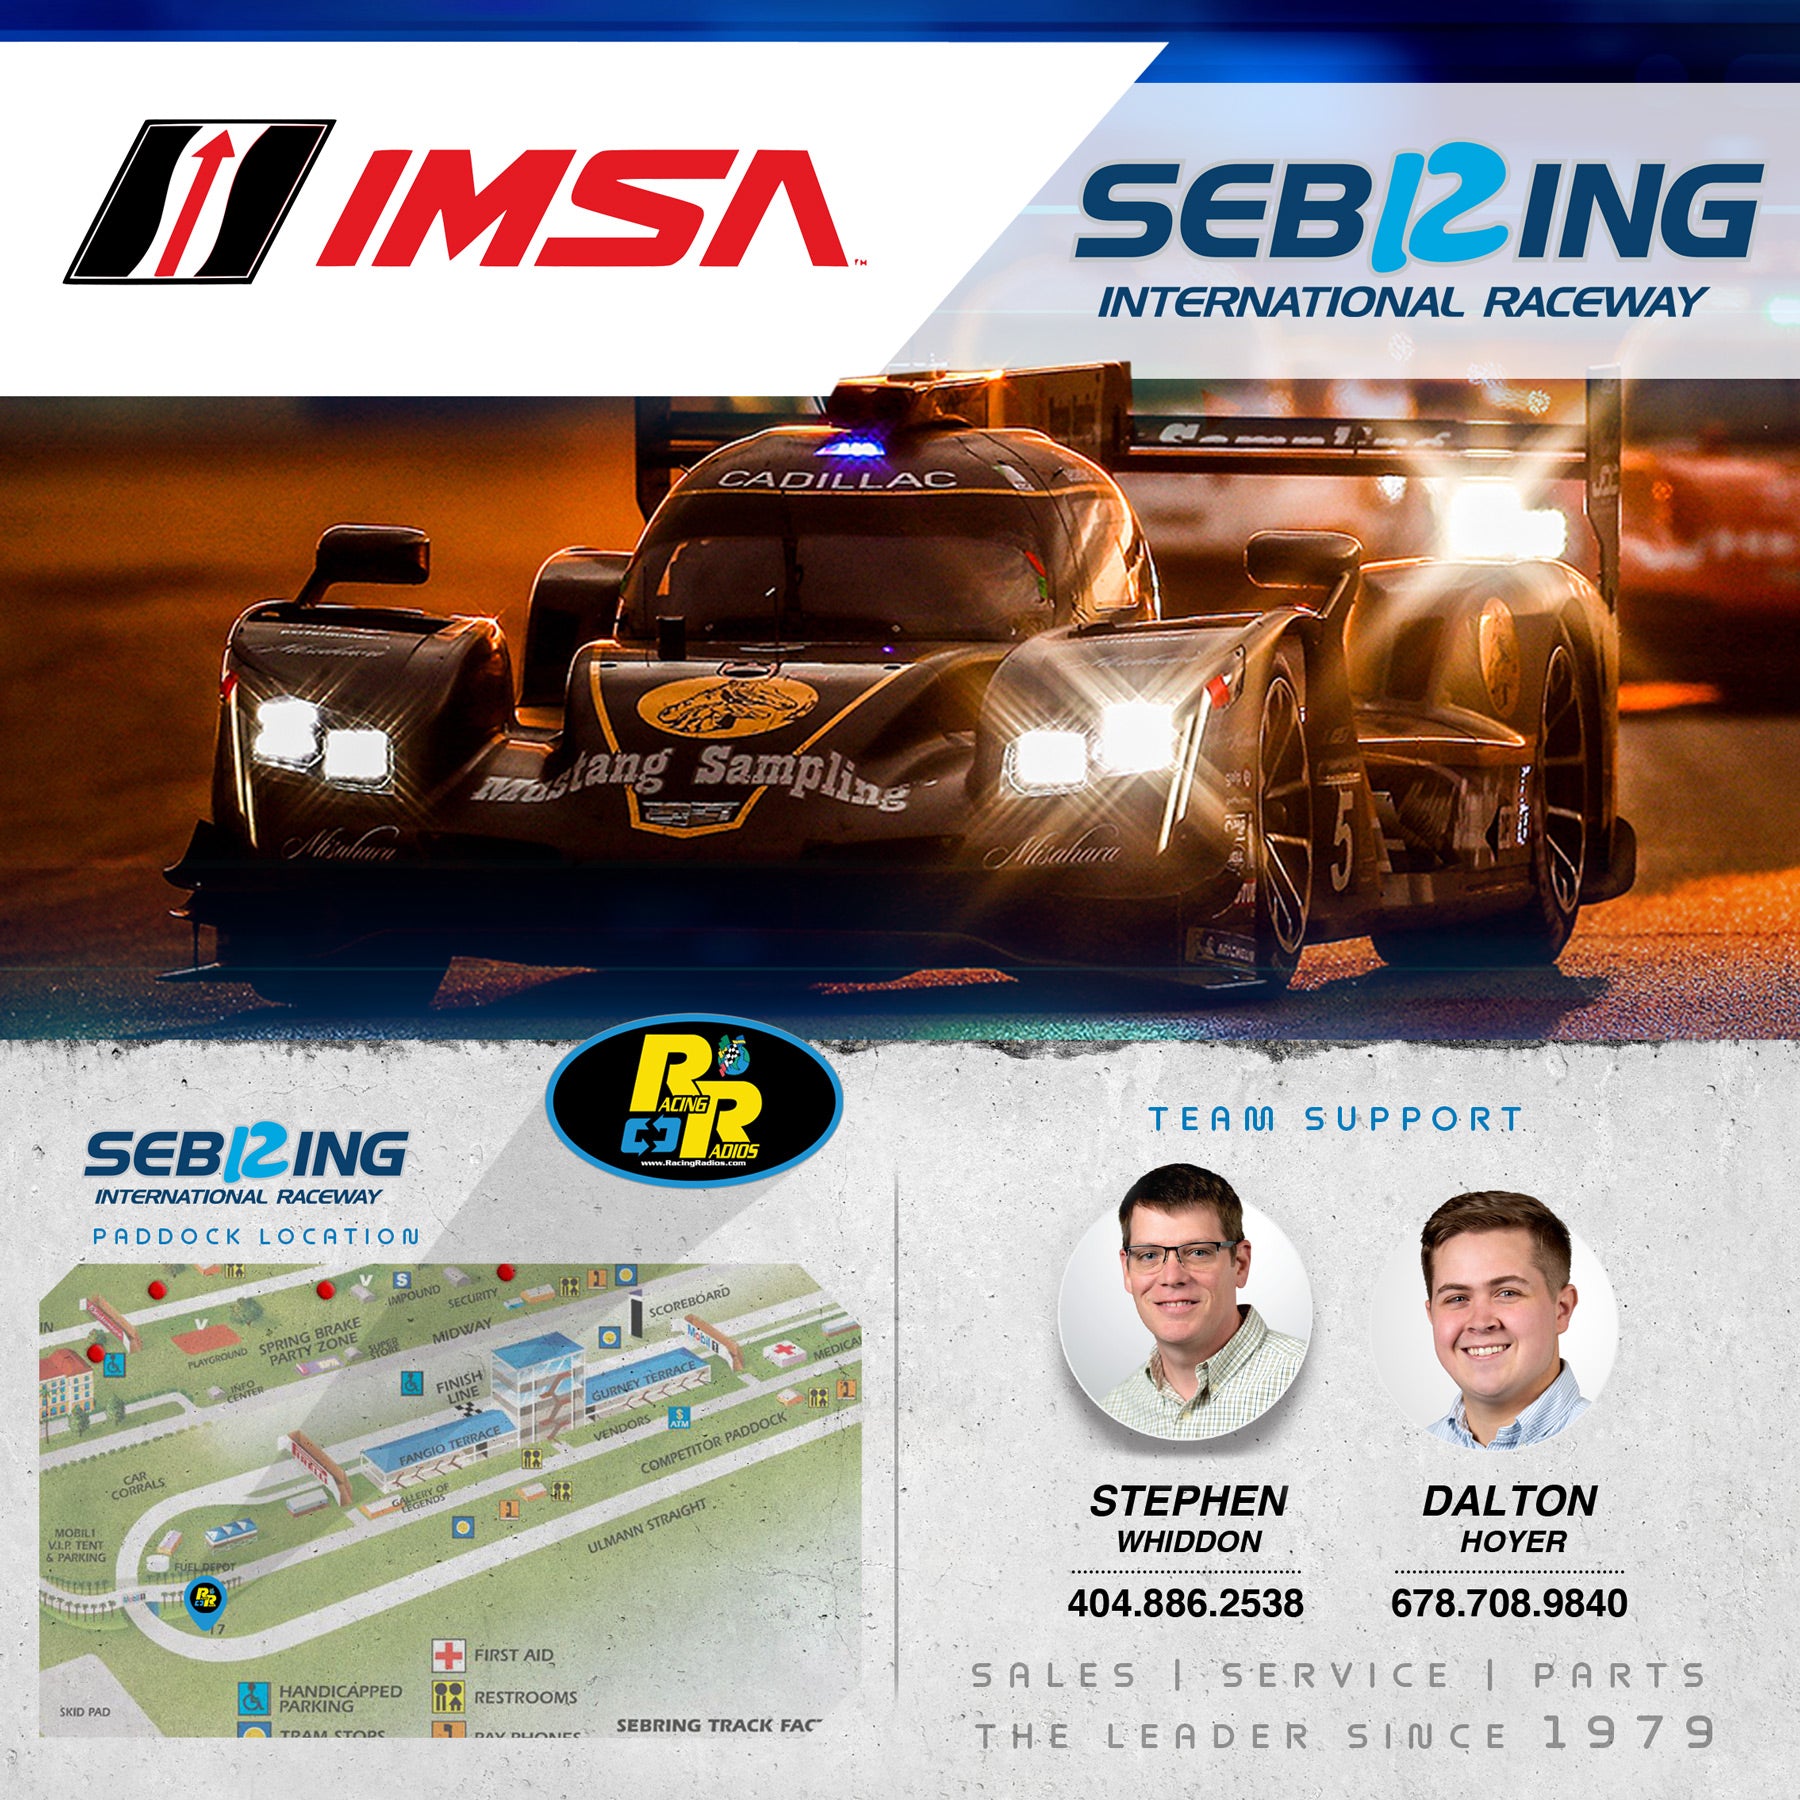 12 Hours of Sebring Racing Radios Paddock location | IMSA 2022